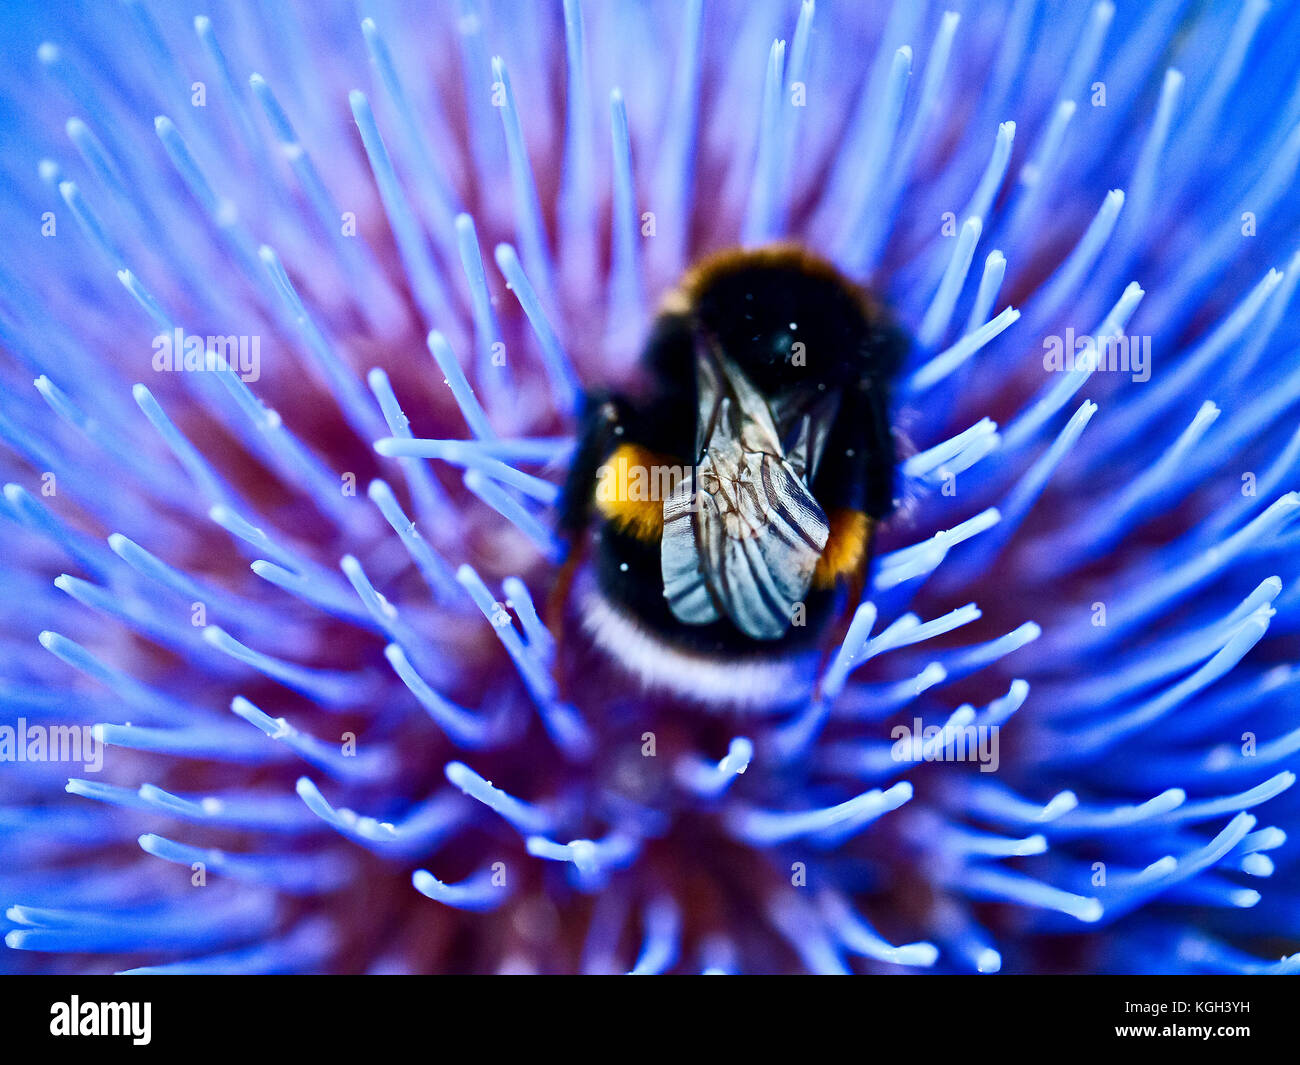 Honey bee hunting for pollen in an artichoke Stock Photo